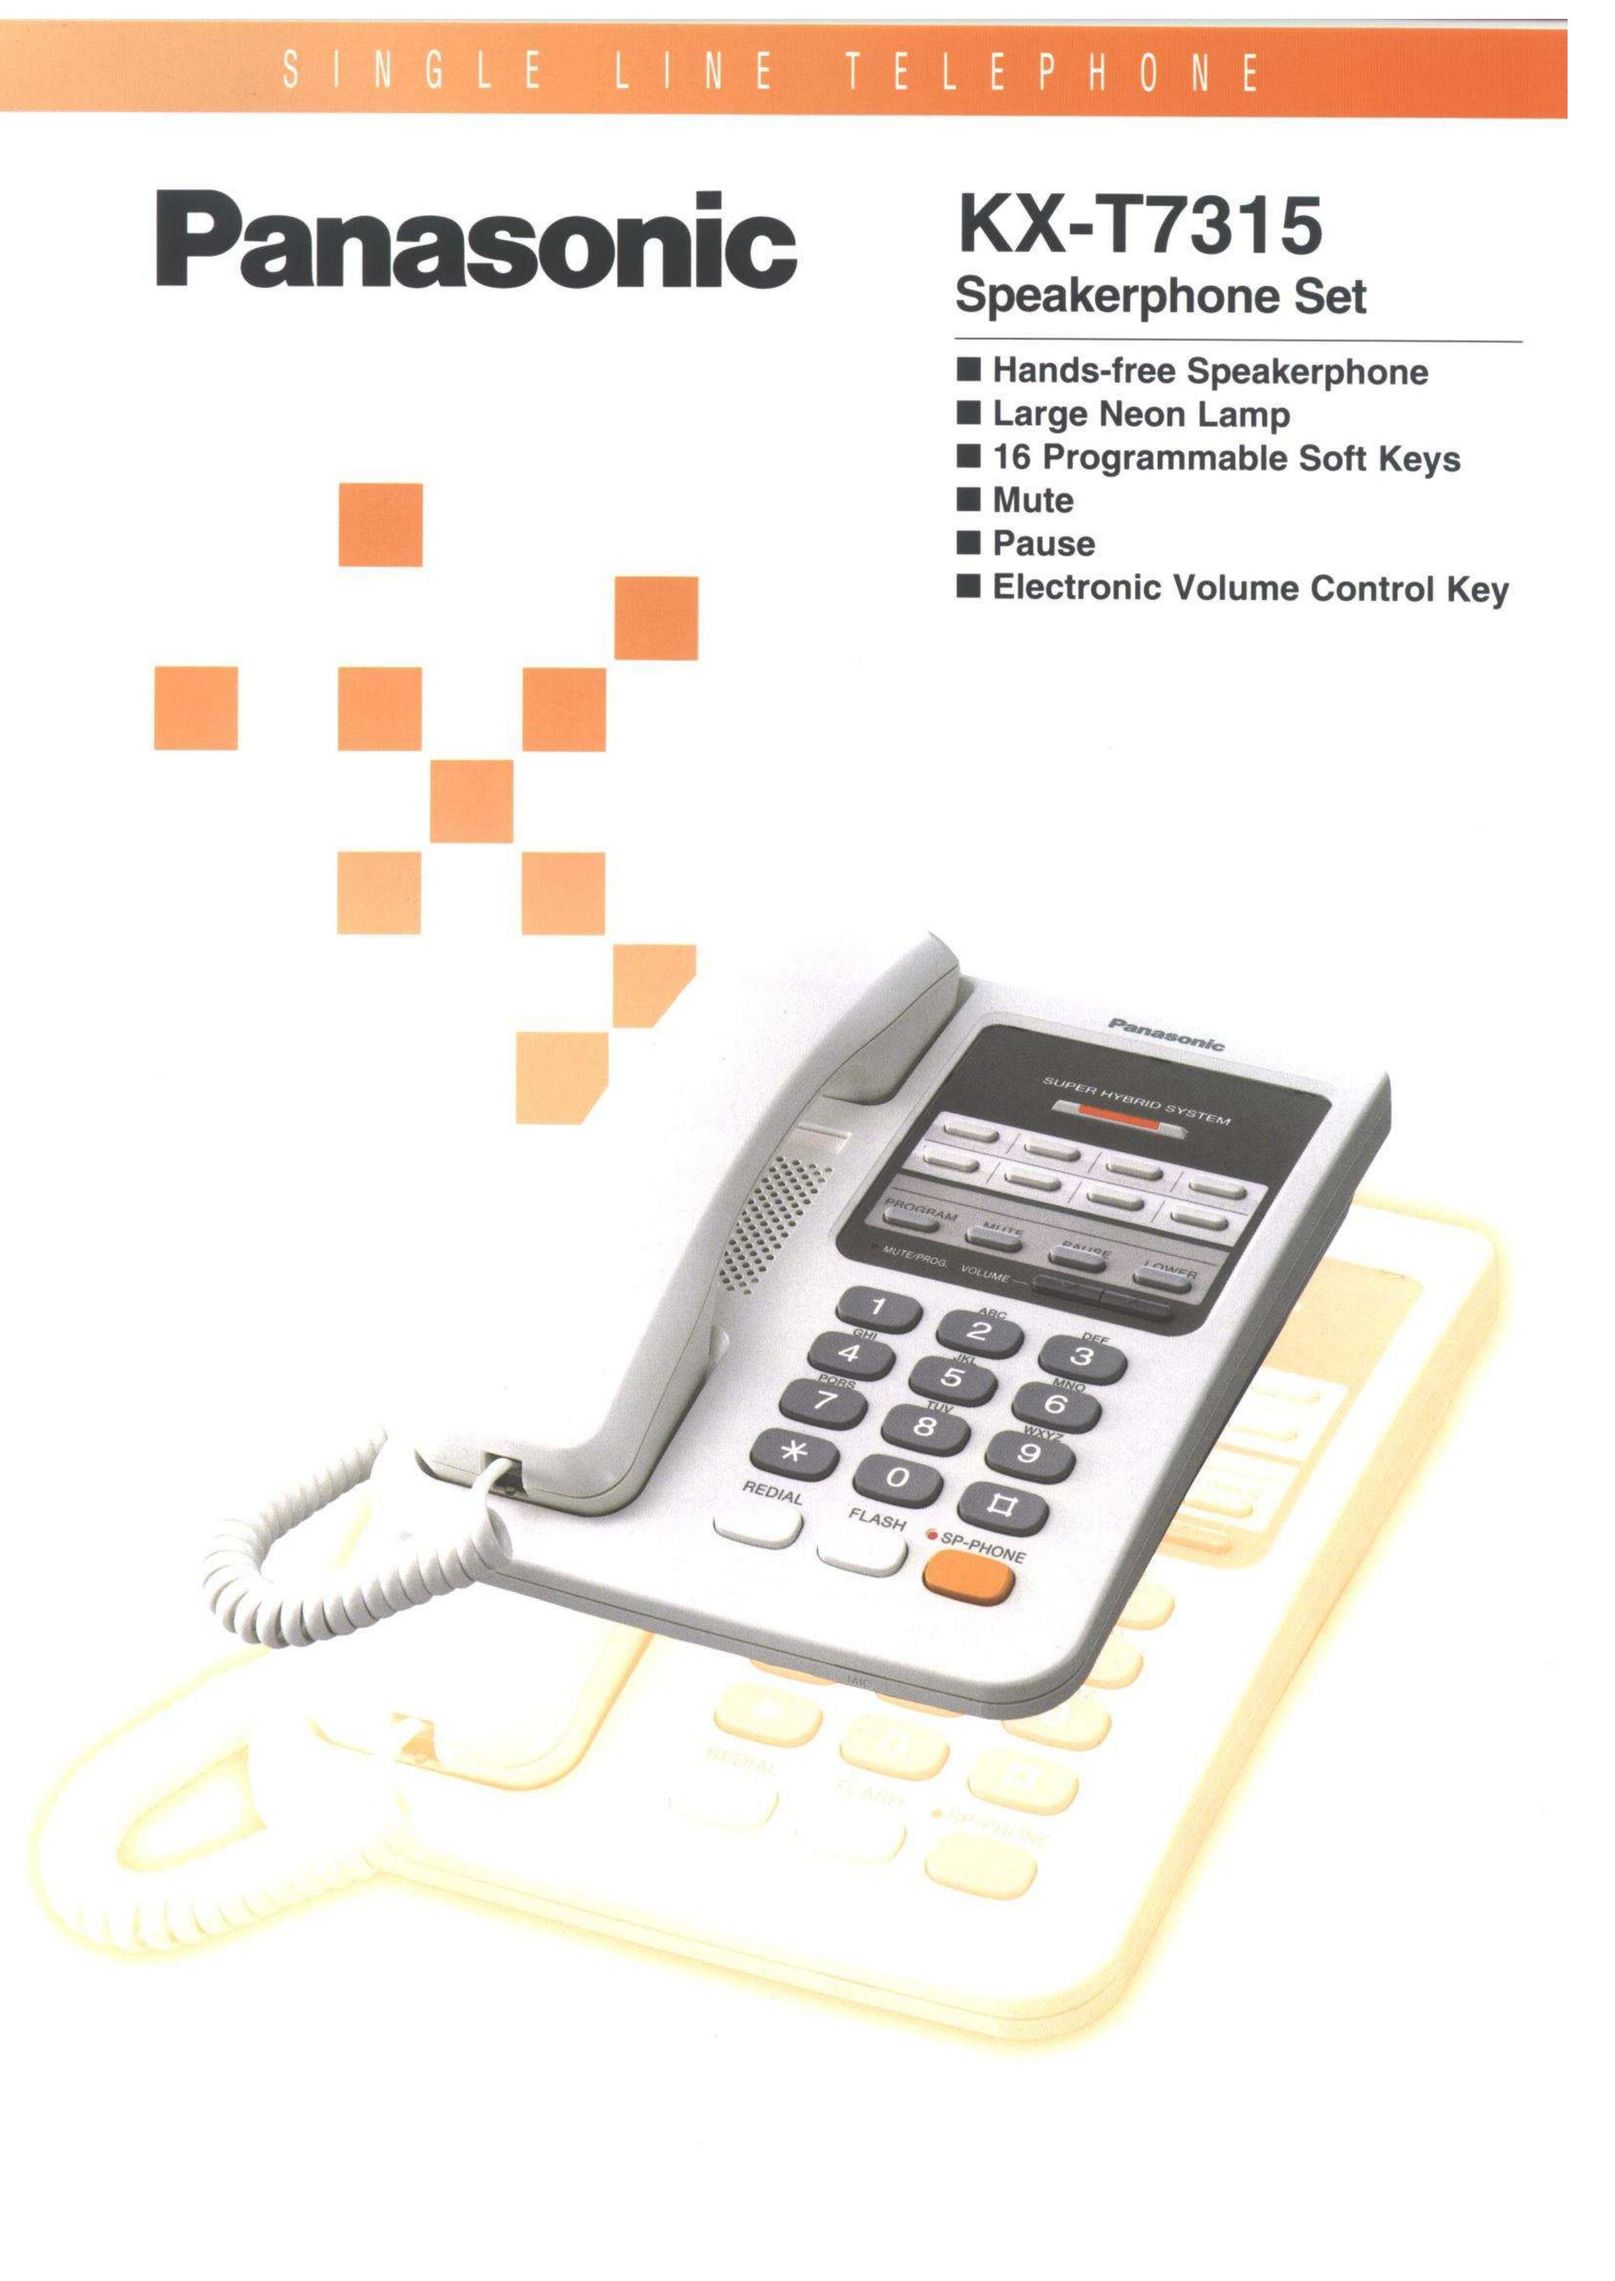 Panasonic KX-T7315 Conference Phone User Manual